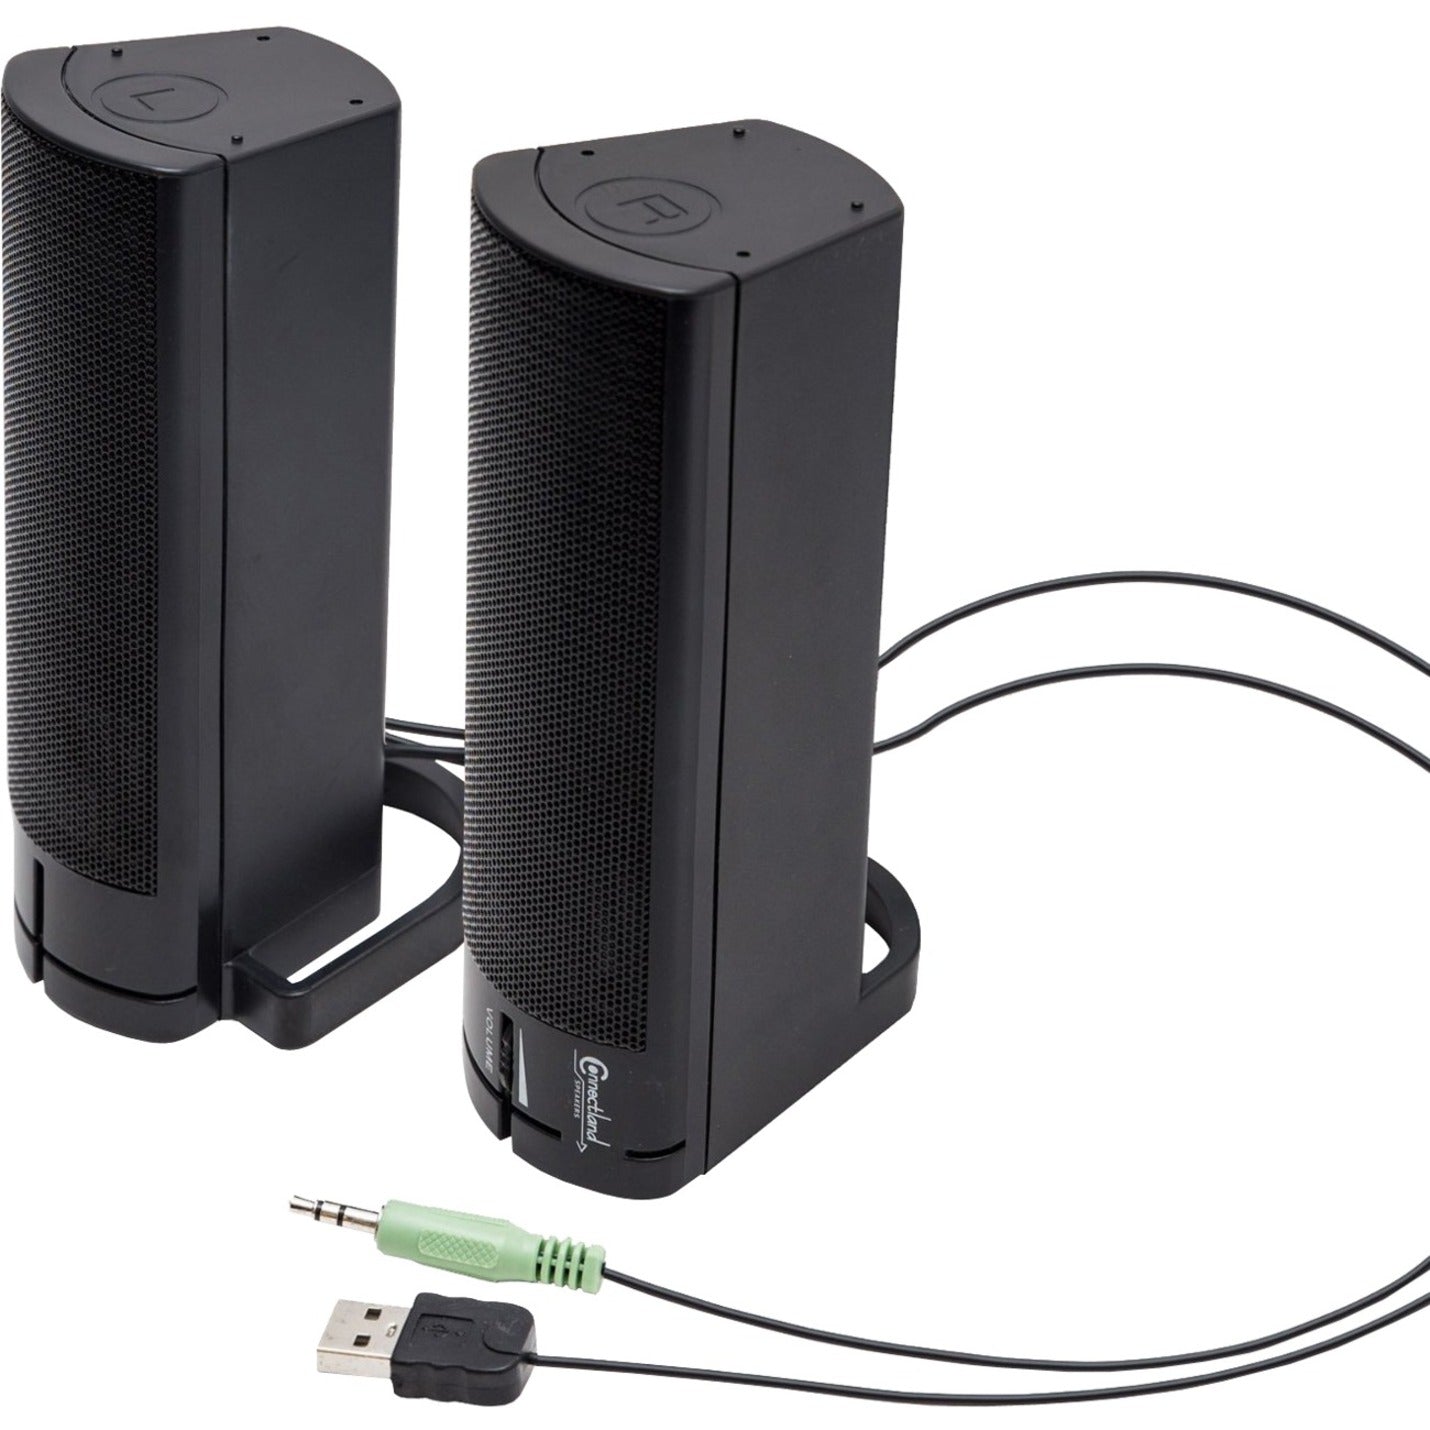 Connectland CL-SPK20037 2.0 Speaker System - 5 W RMS - Black